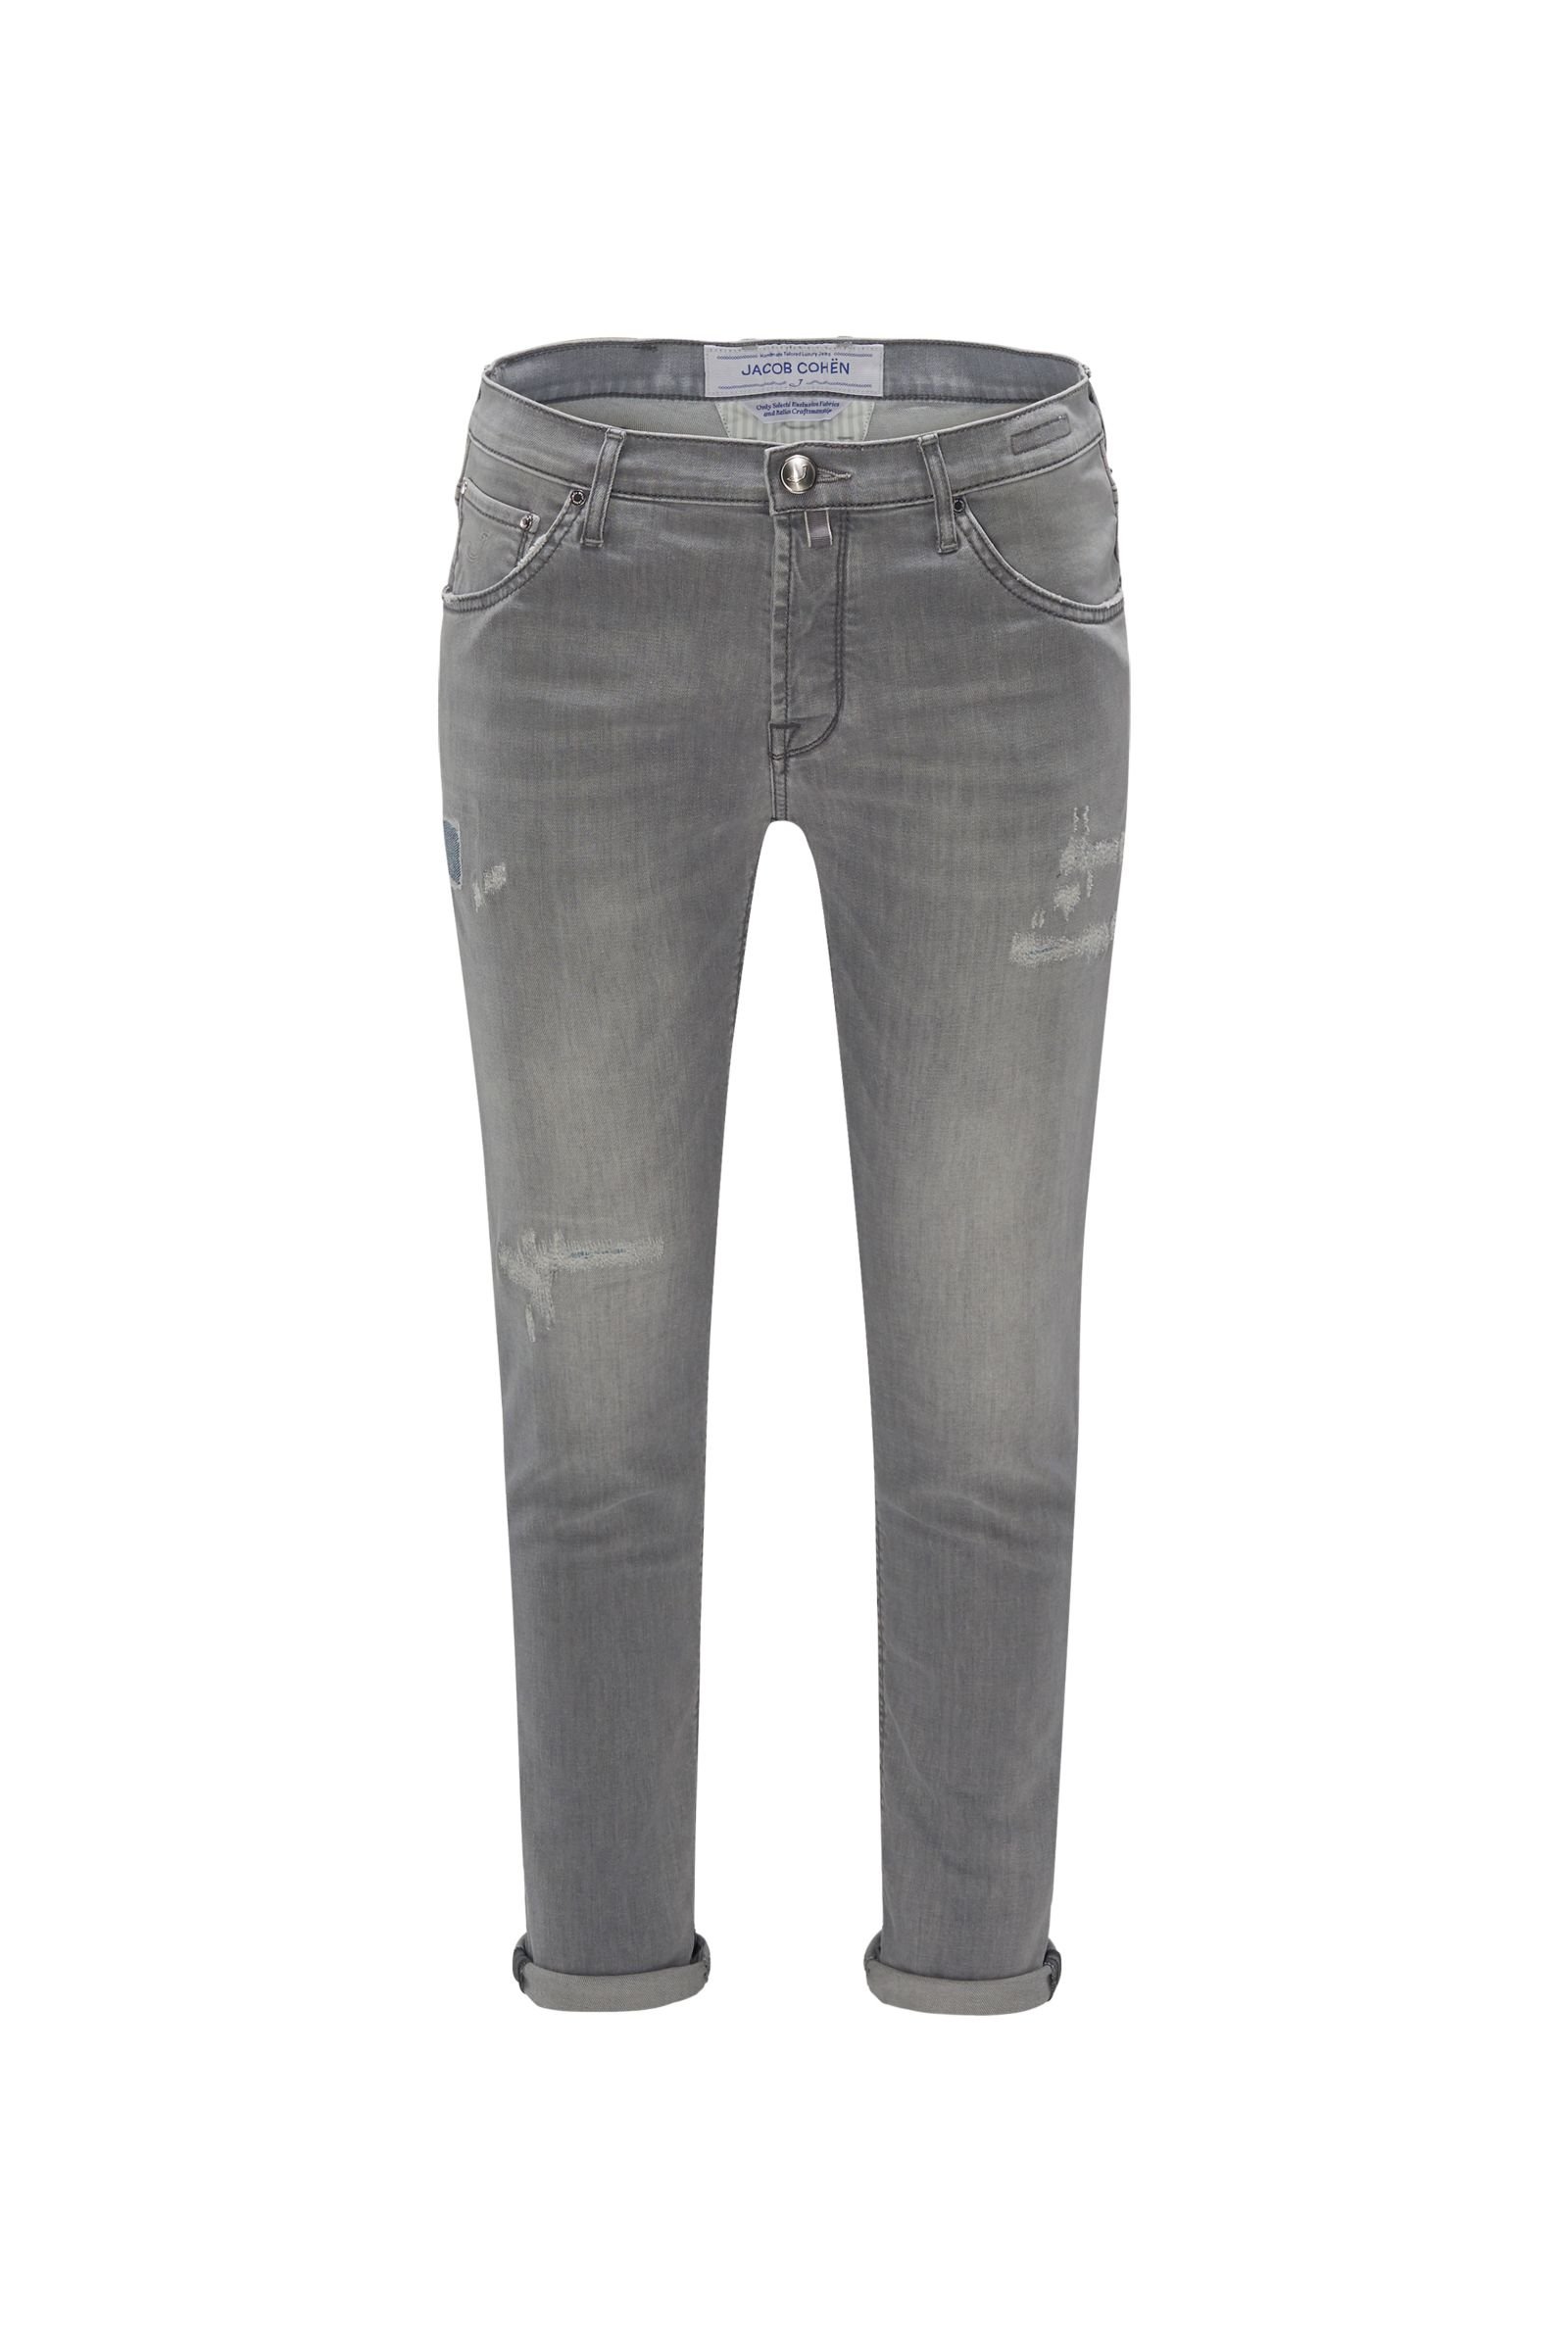 Jeans 'J688 Comfort Slim Fit' light grey